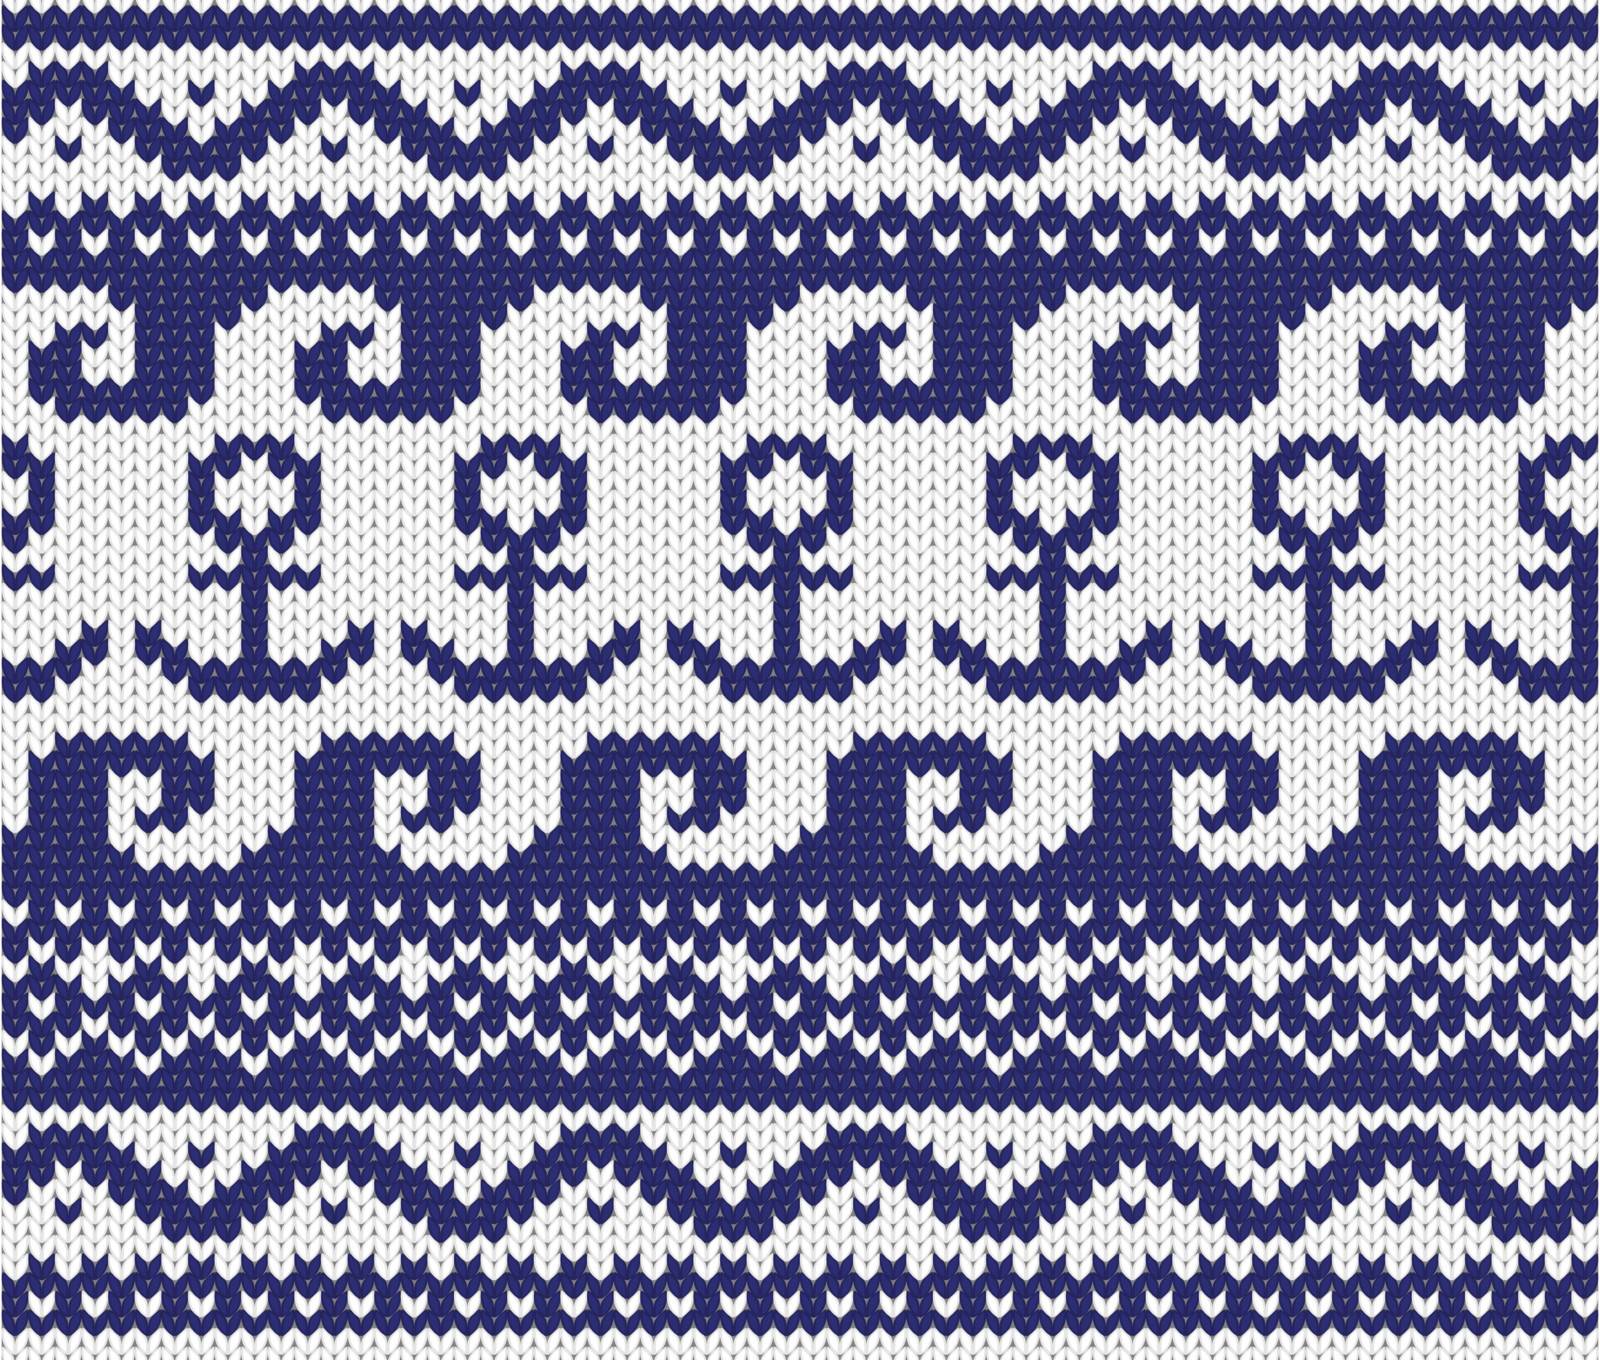 Seamless knitted marine pattern . EPS 8 vector illustration.